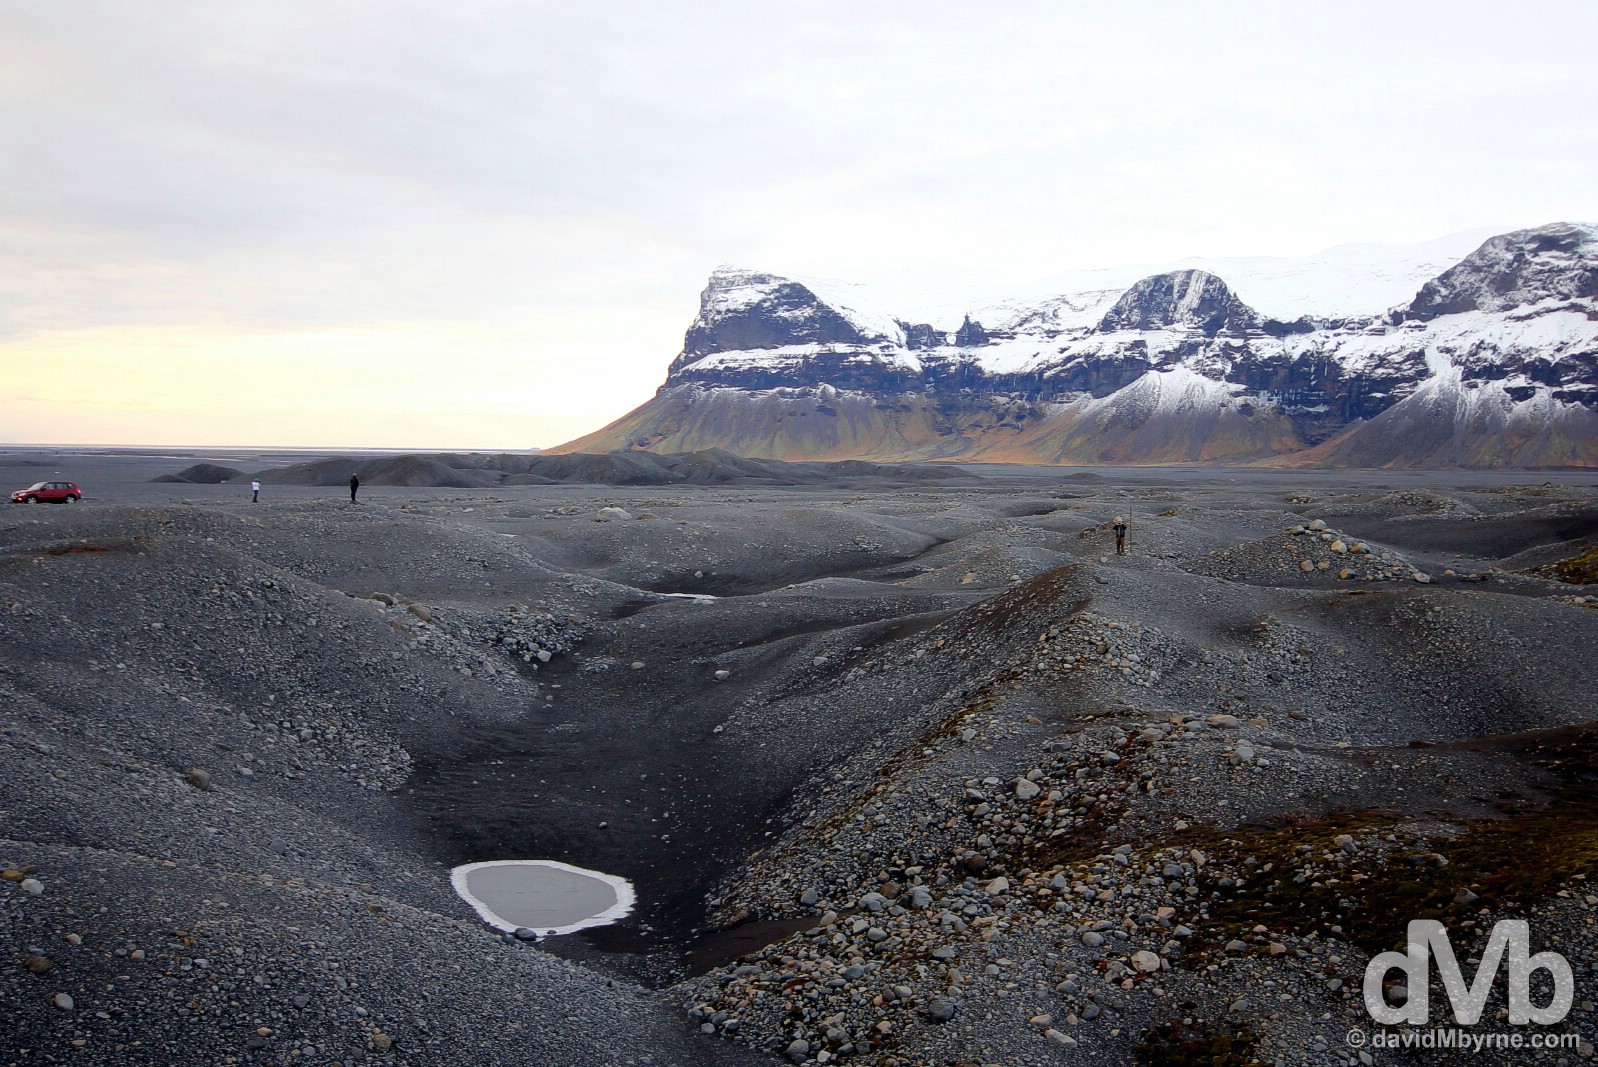 Surveying the desolation at Mýrdalssandur, southern Iceland. December 4, 2012.